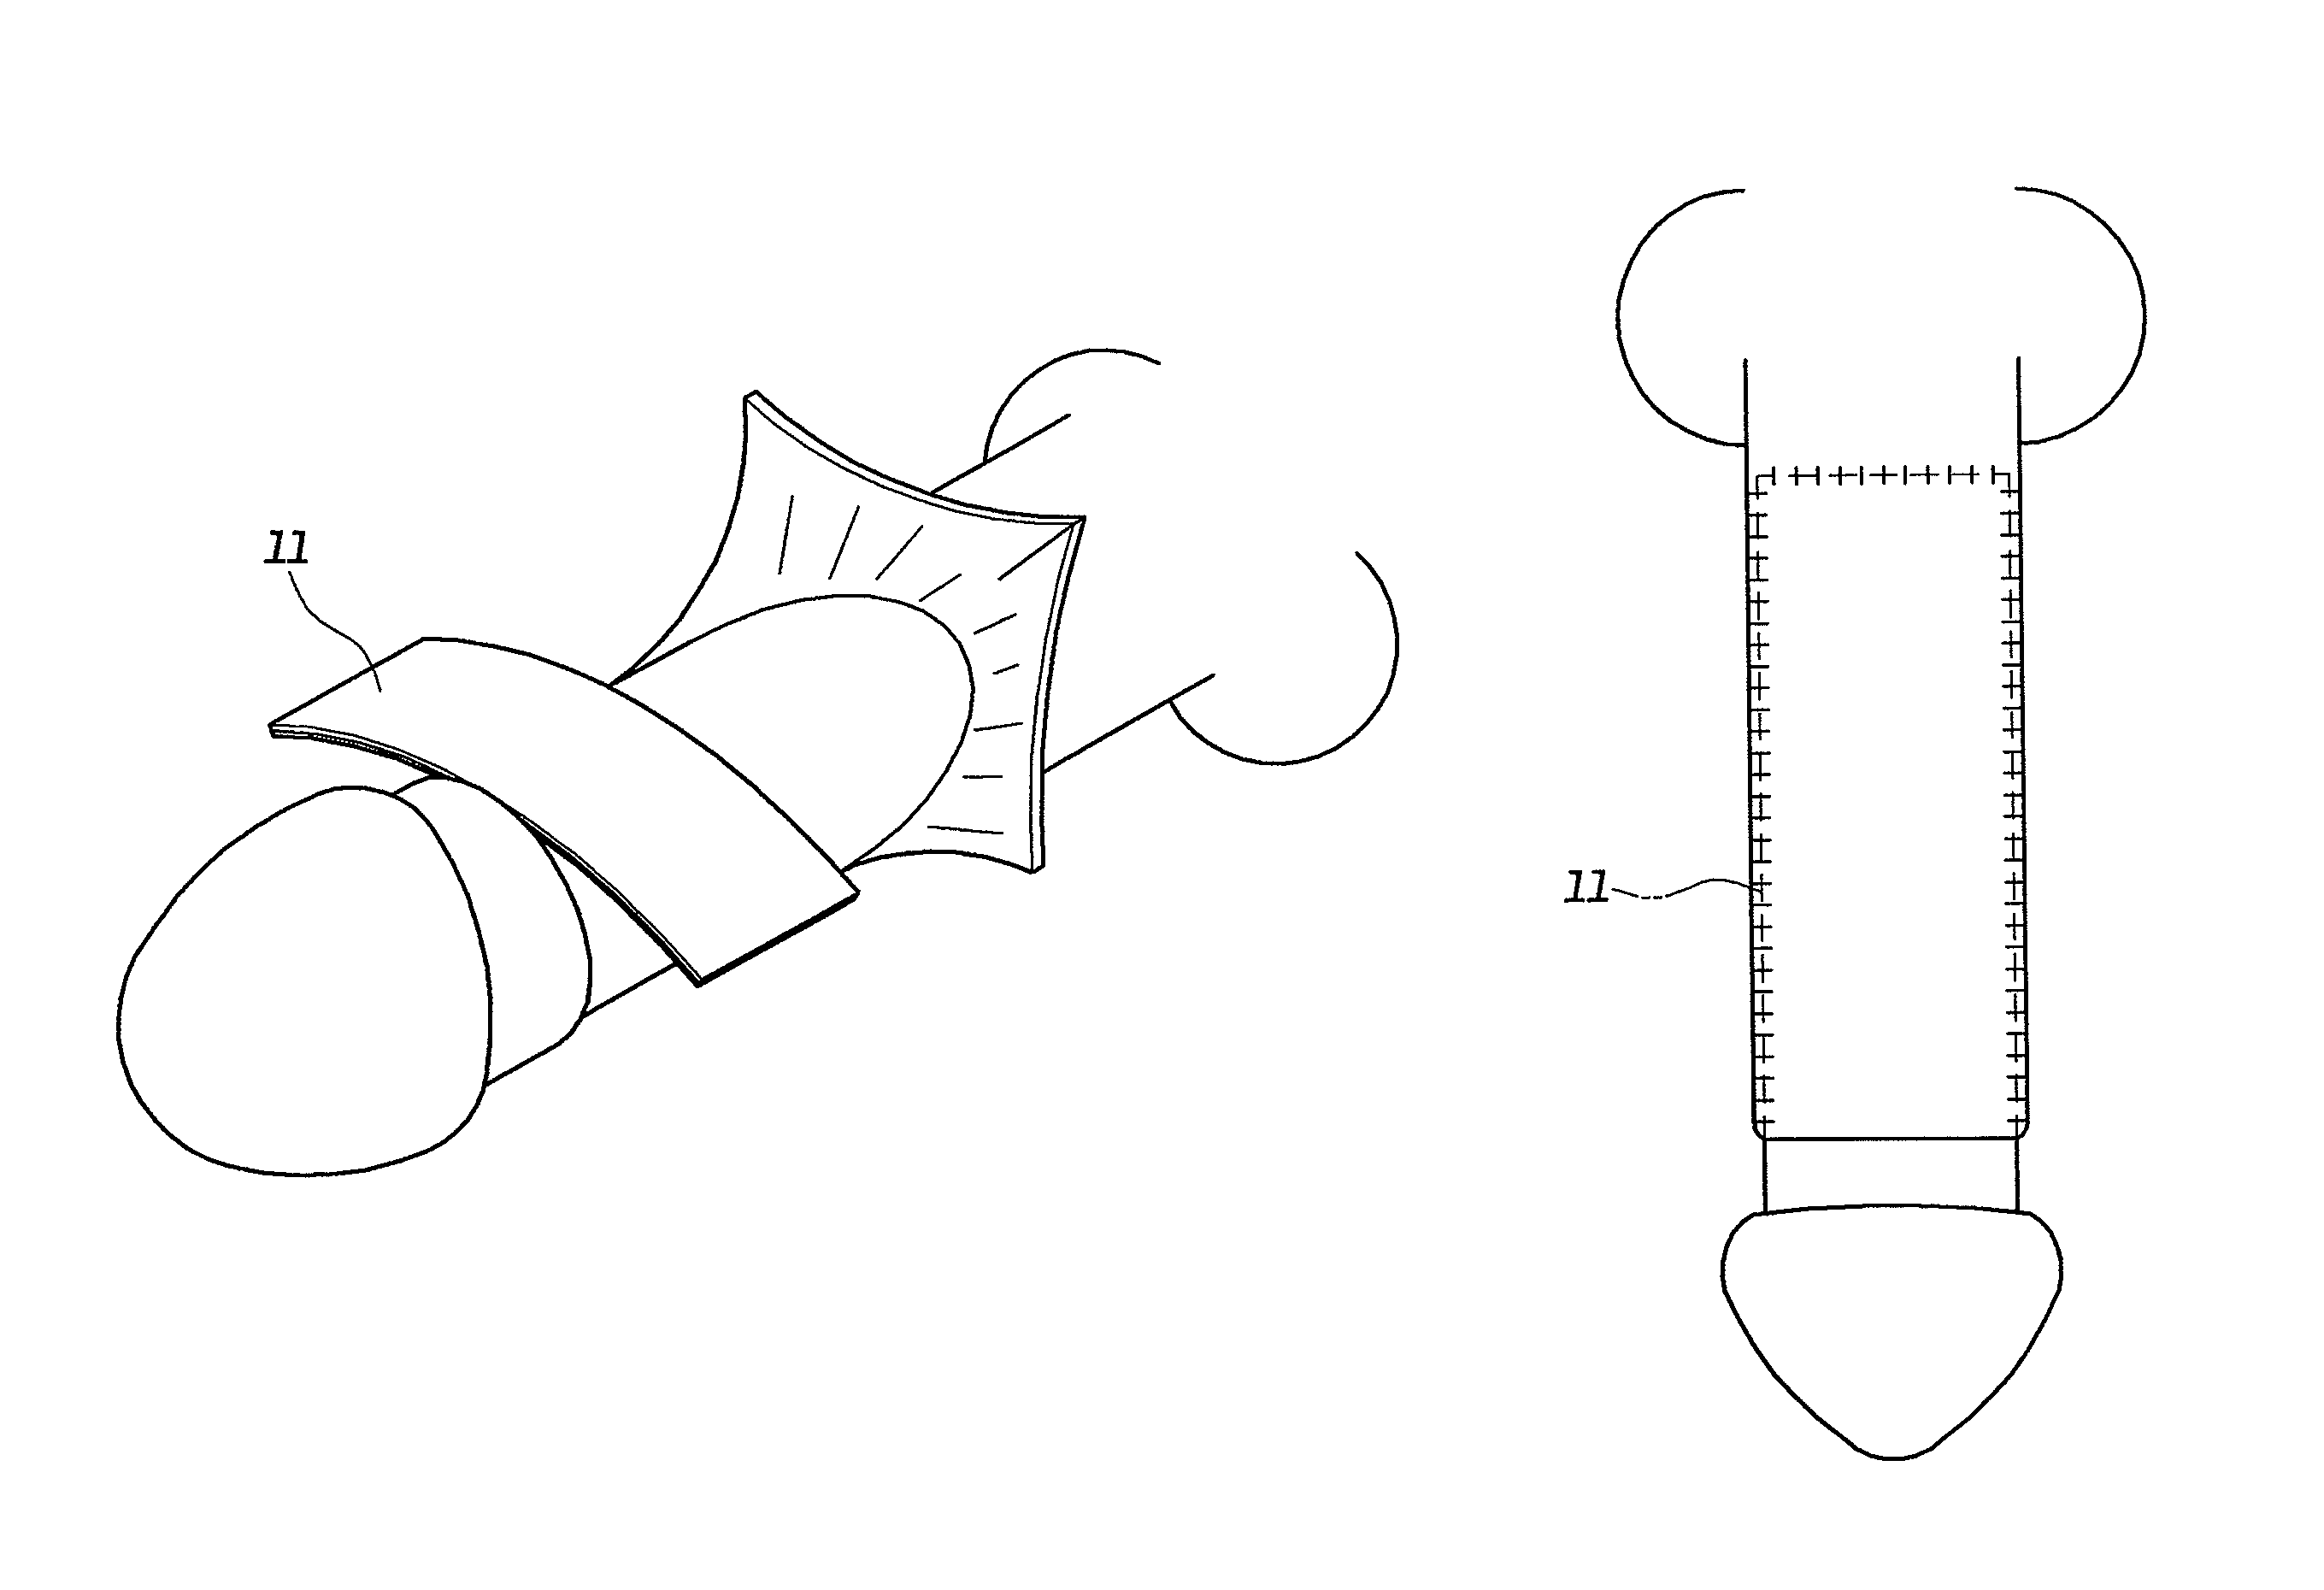 Method for complex phaloplasty using circumcised foreskin as autograft